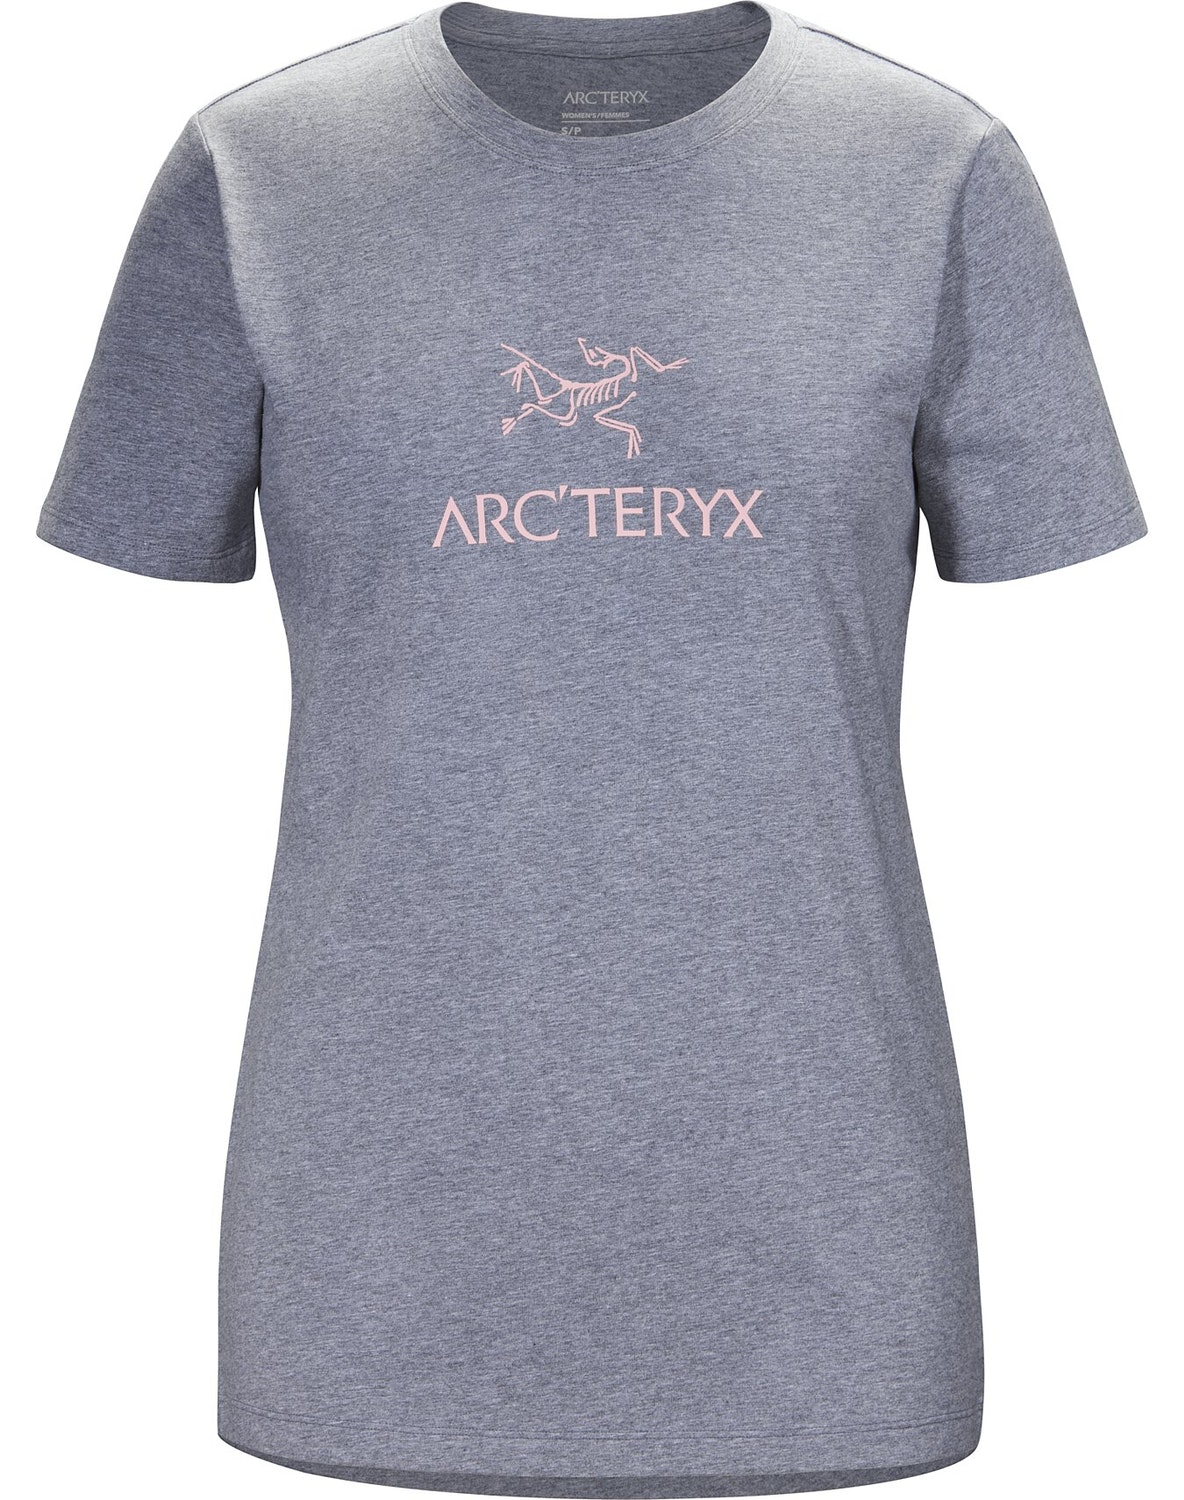 T-shirt Arc'teryx Arc'Word Donna Grigie - IT-1351